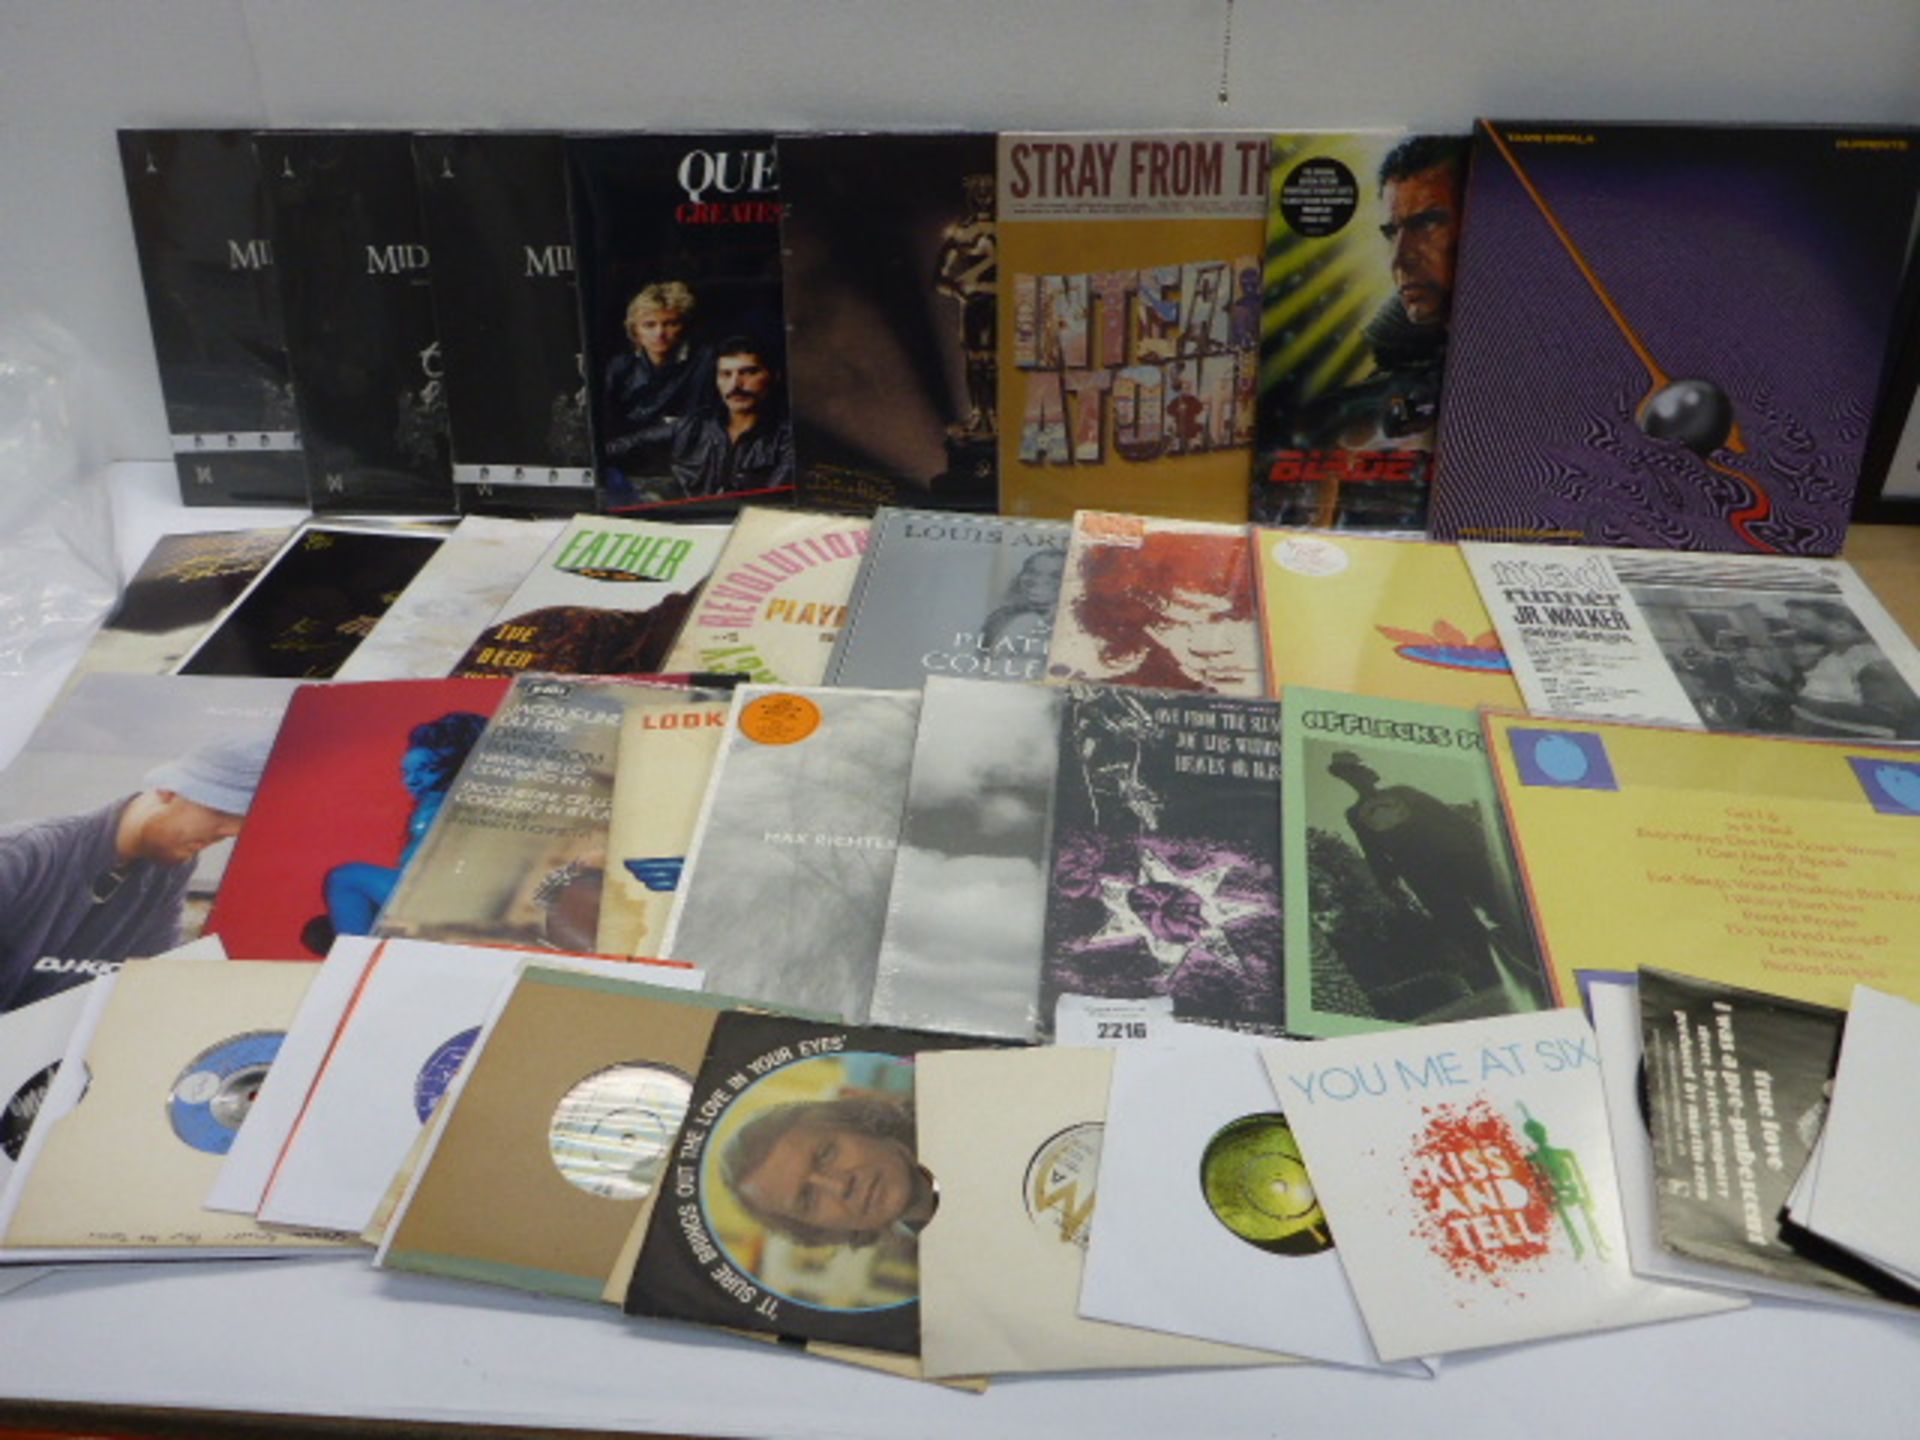 Box of Vinyl records including Blade Runner OST, Queen, Gary Moore, etc.